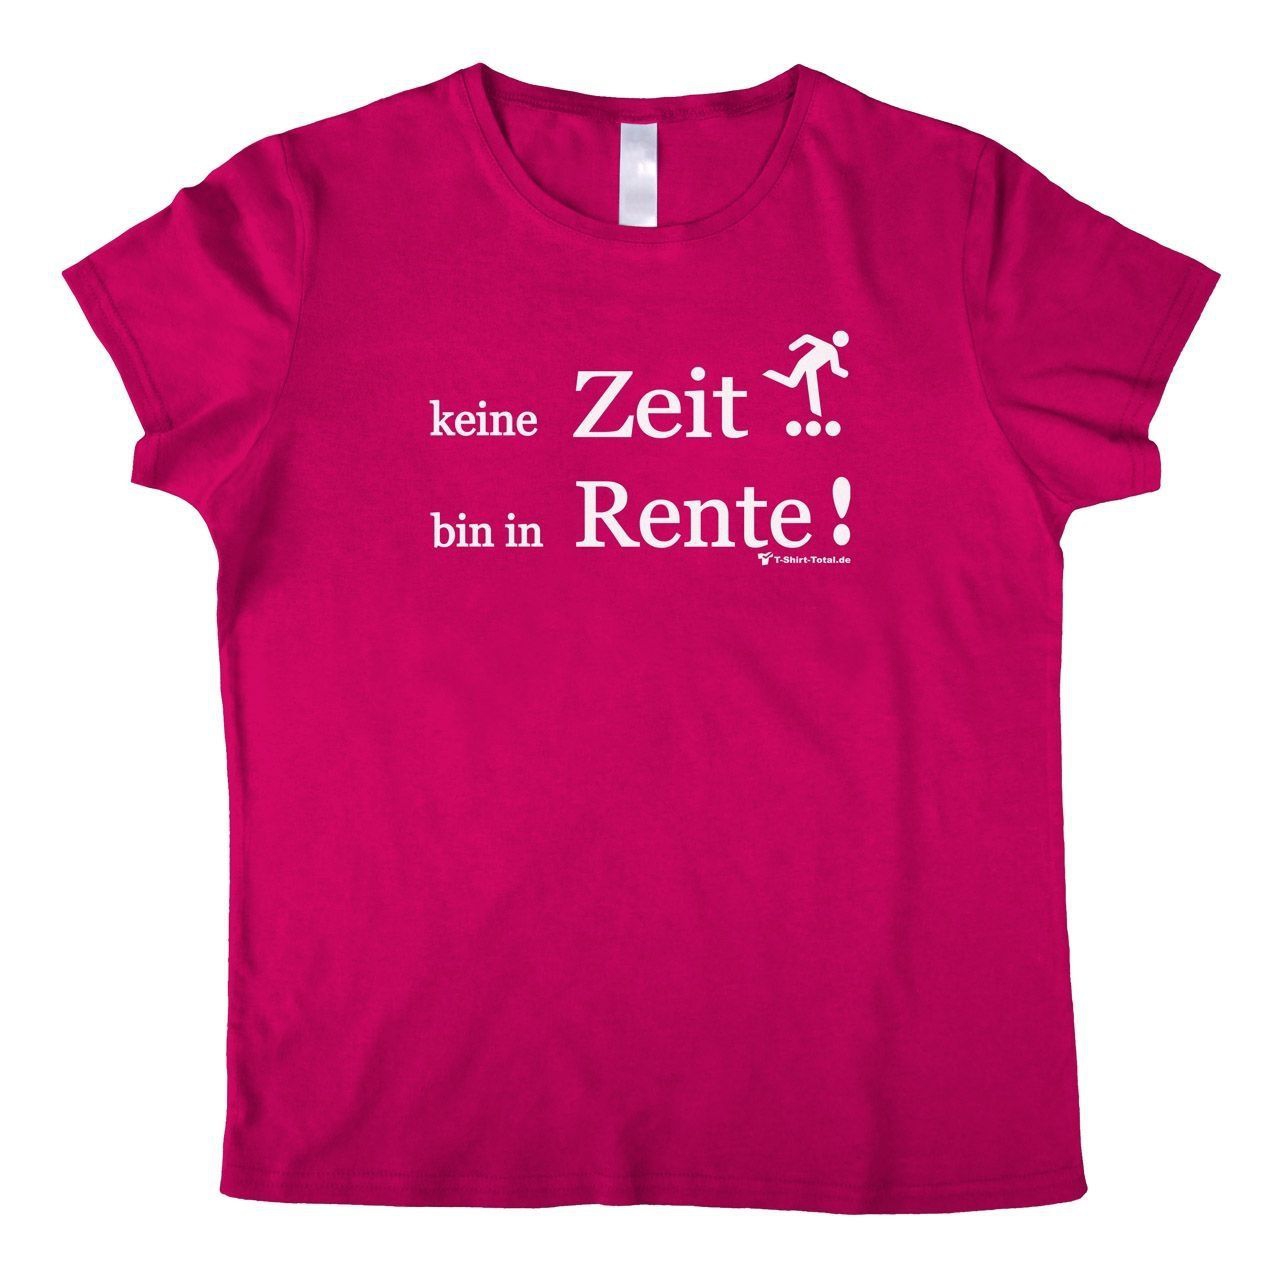 Bin in Rente Woman T-Shirt pink Extra Large